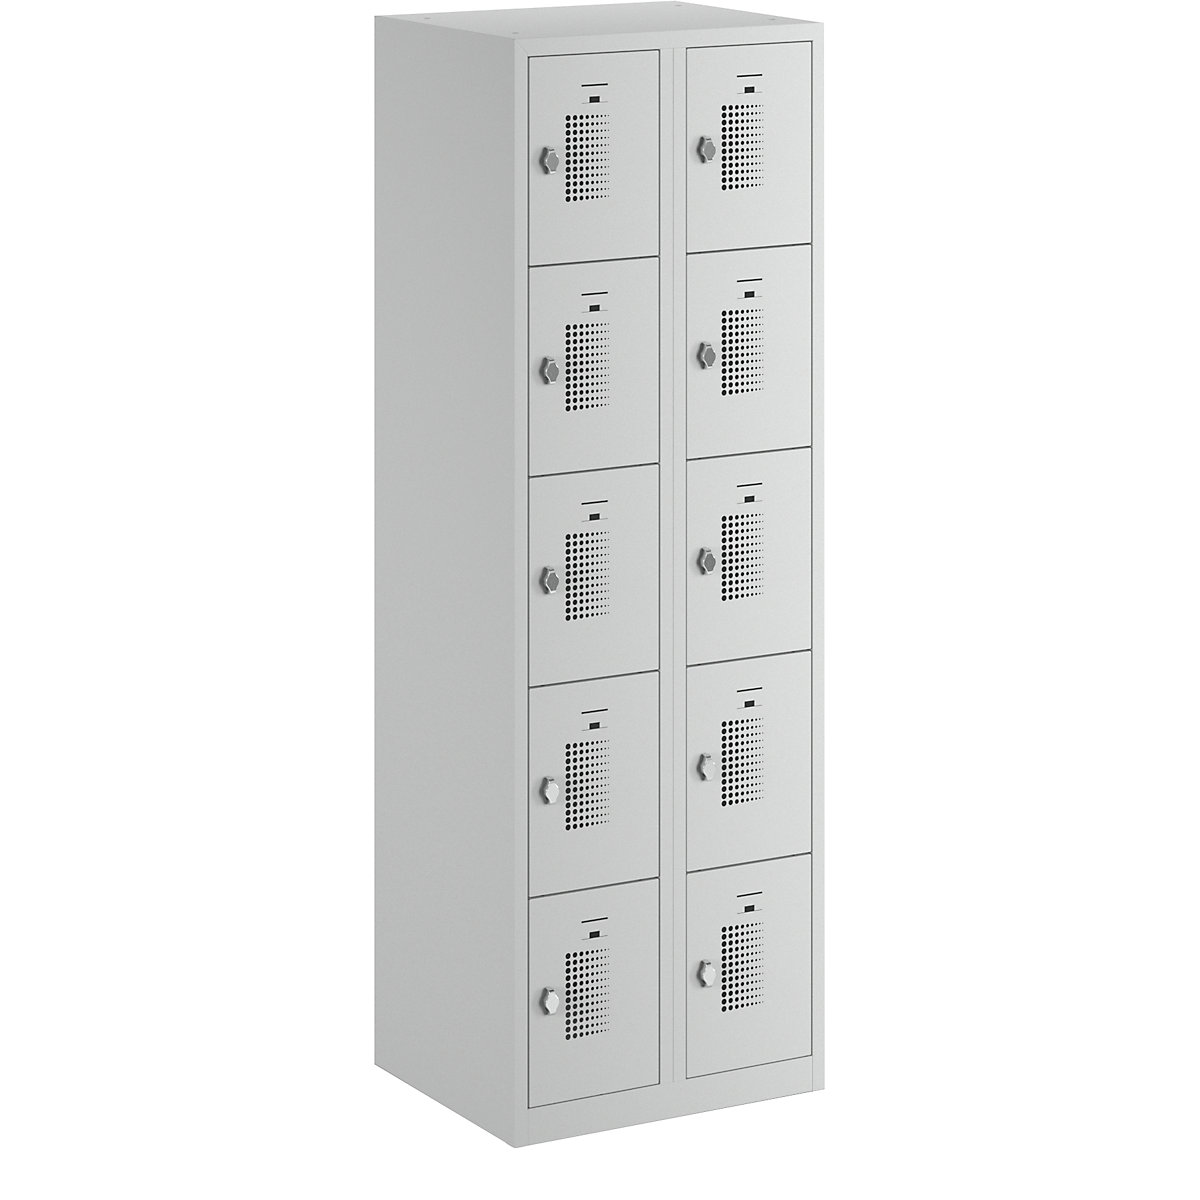 AMSTERDAM compartment locker – eurokraft basic, 2 compartments, width 600 mm, 10 compartments, rotary bolt for padlock, door colour light grey, body in light grey-17